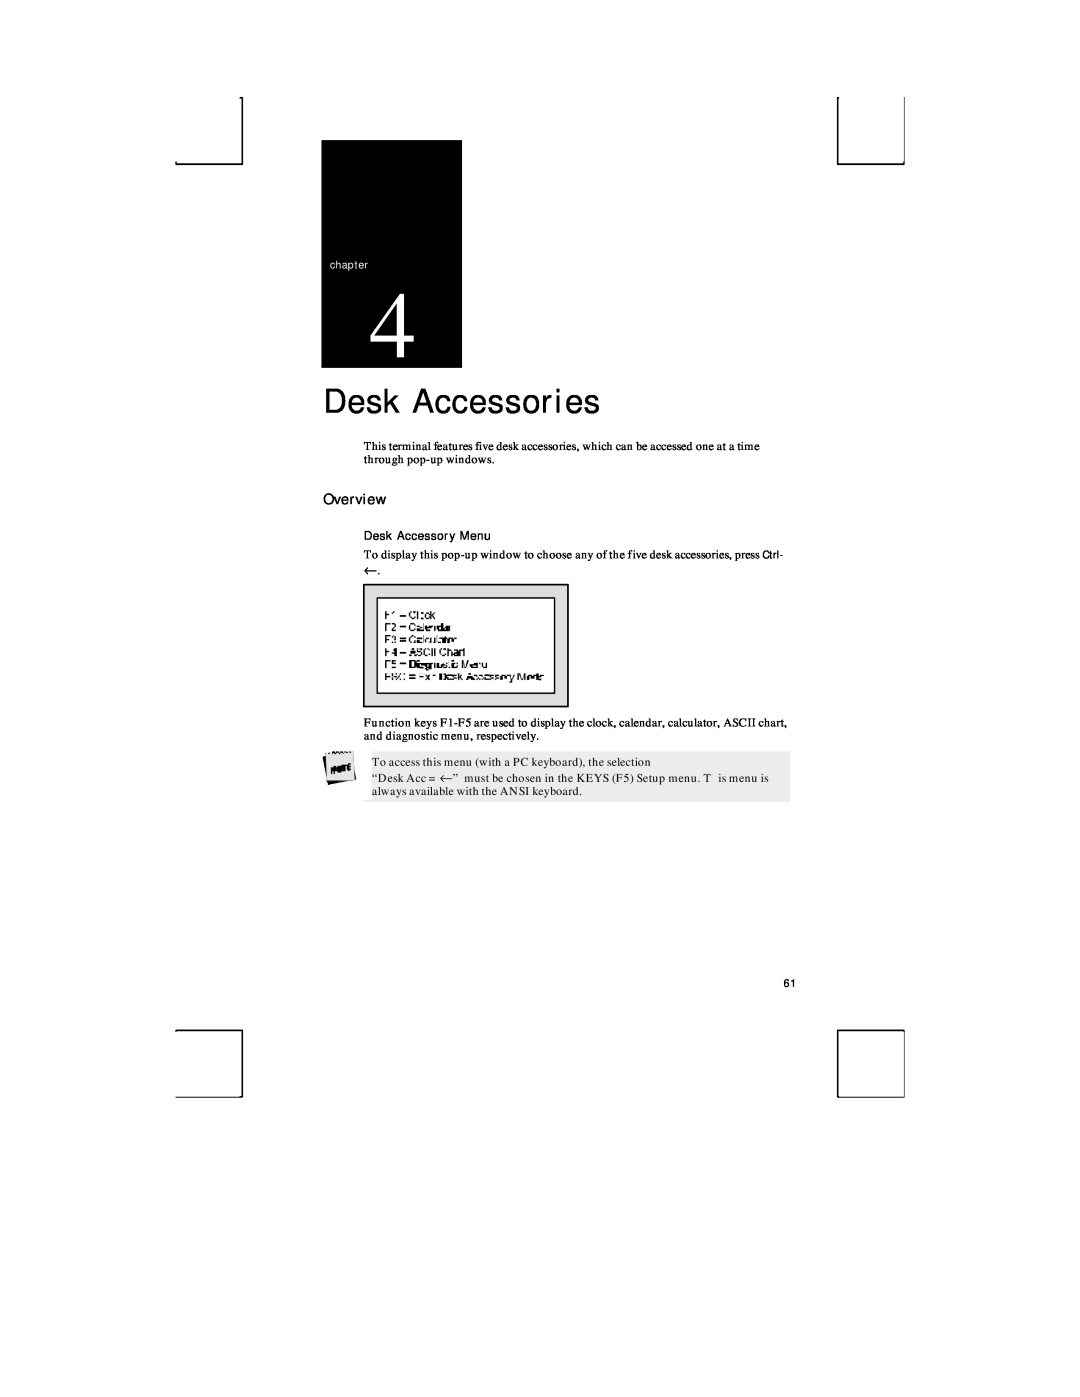 Boundless Technologies ADDS 3153 ASCII manual Desk Accessories, Desk Accessory Menu, Overview 